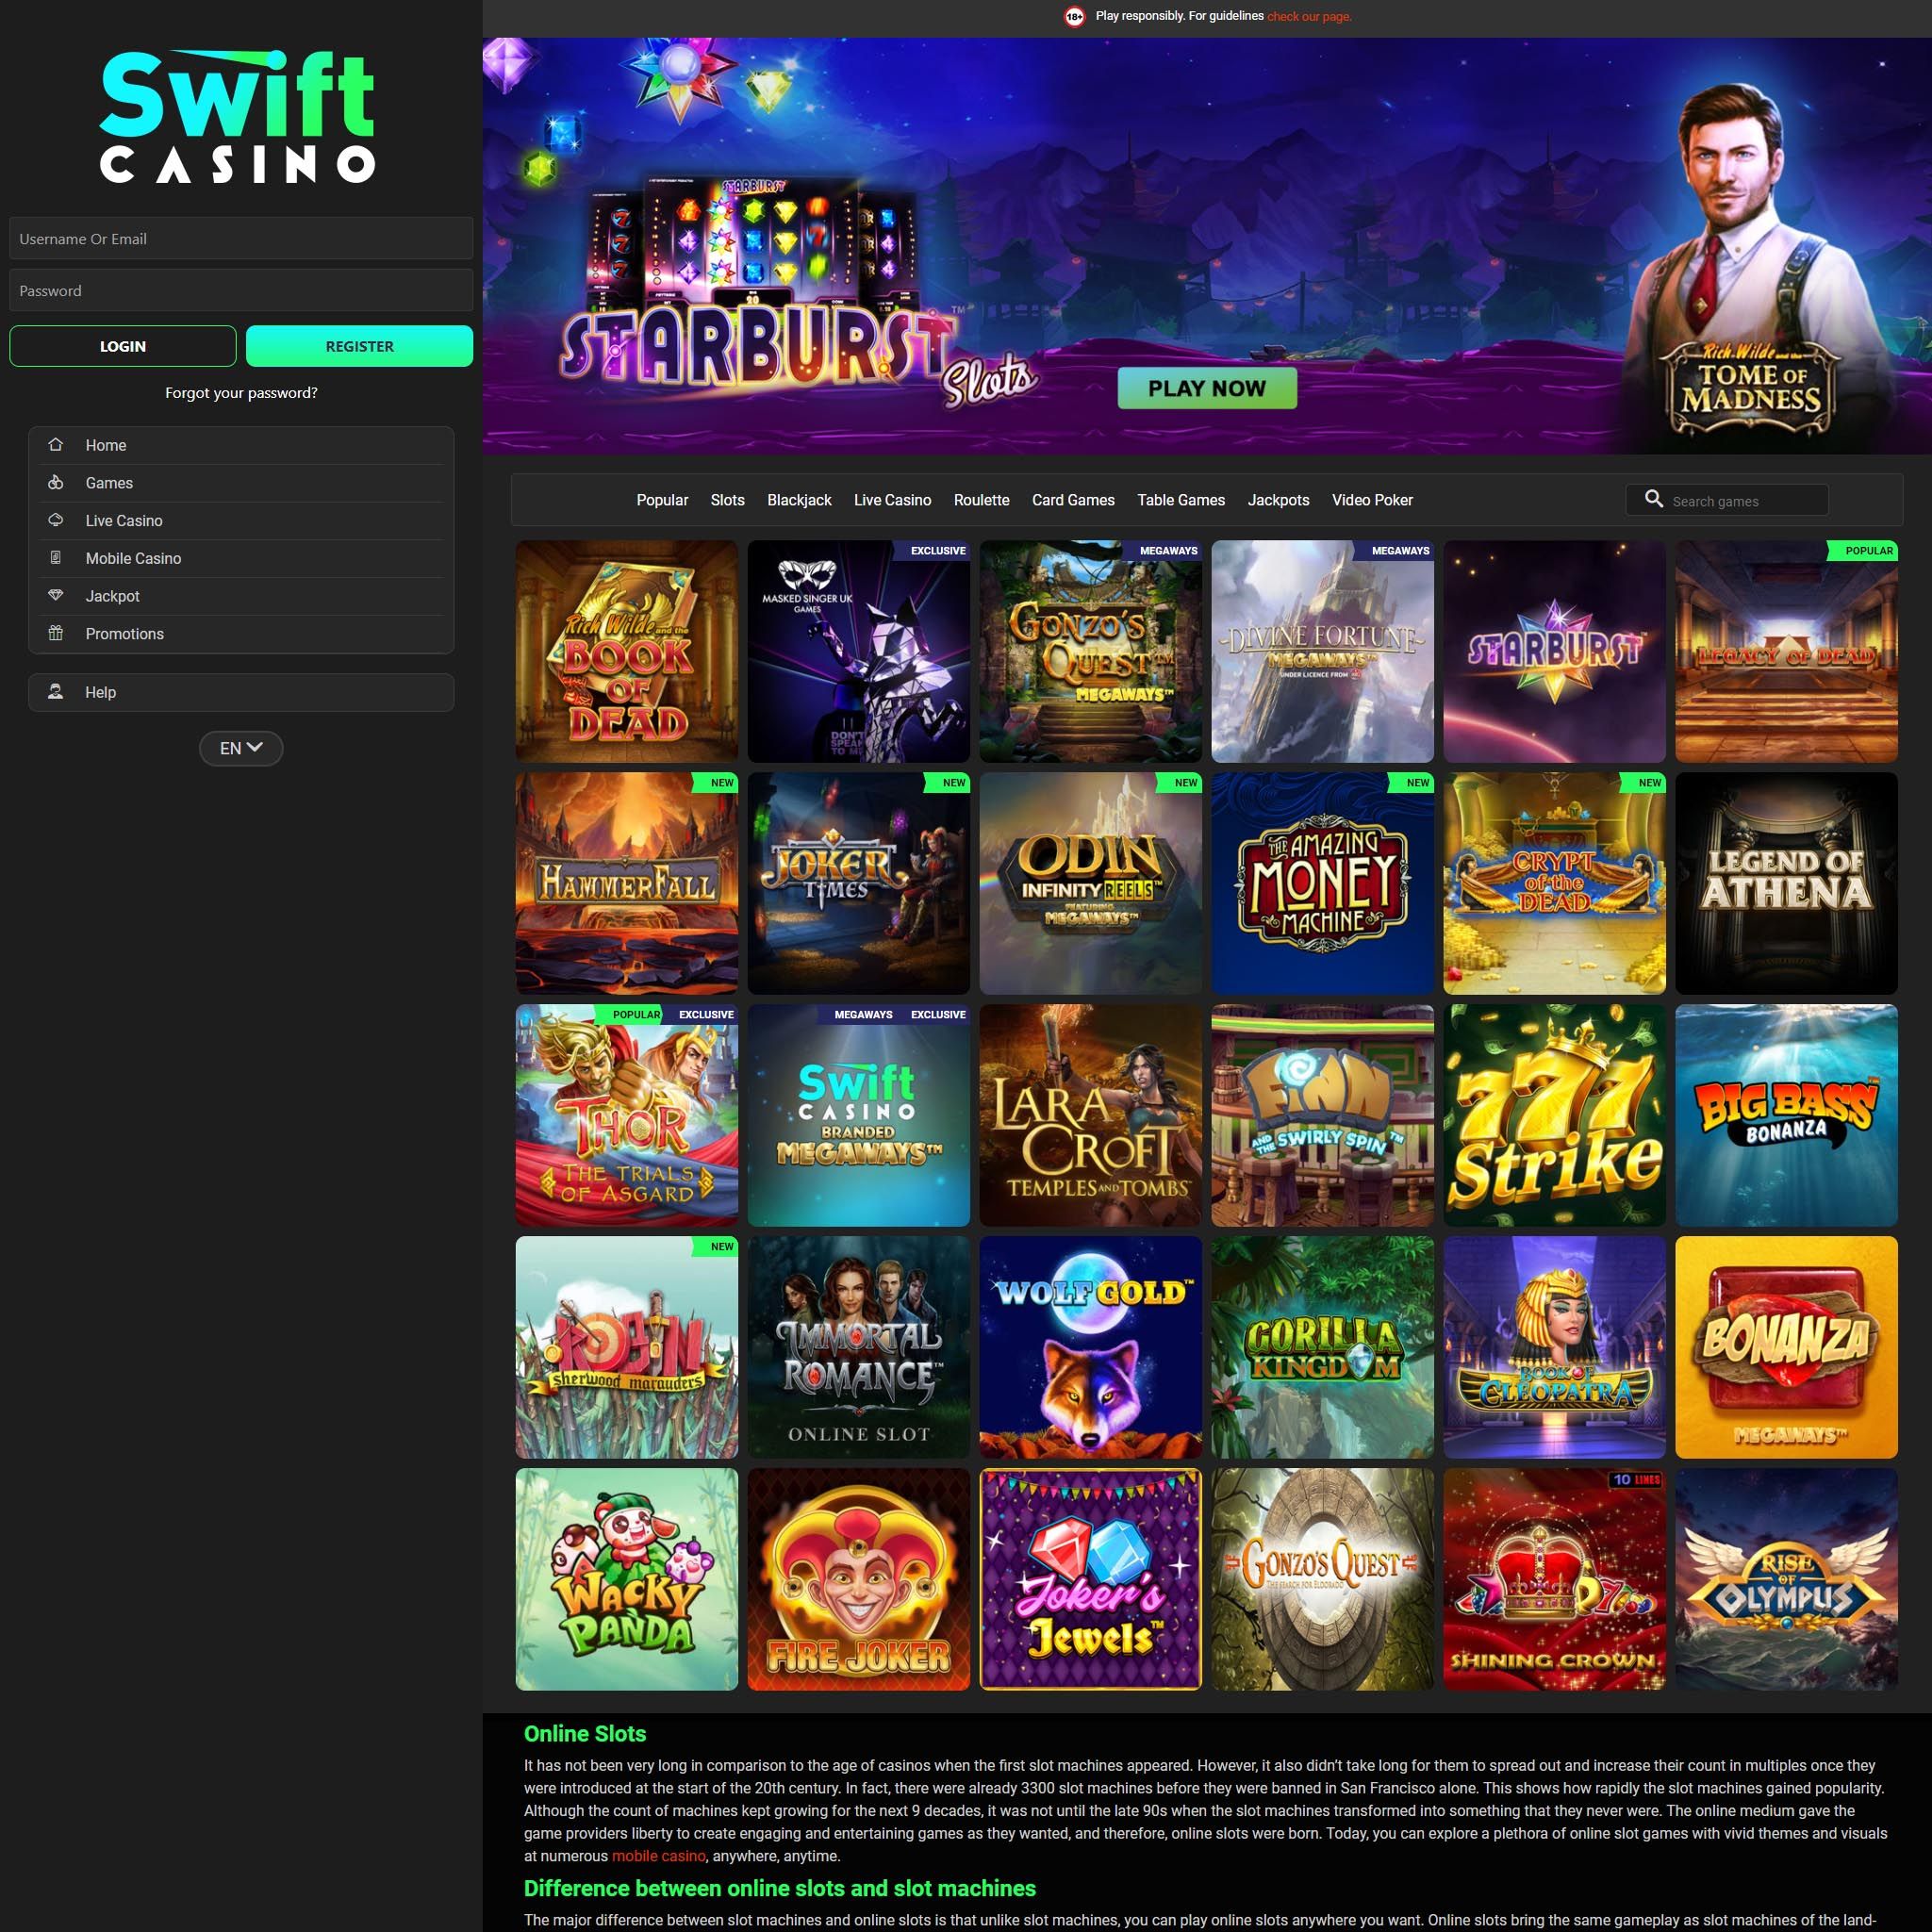 Swift Casino full games catalogue